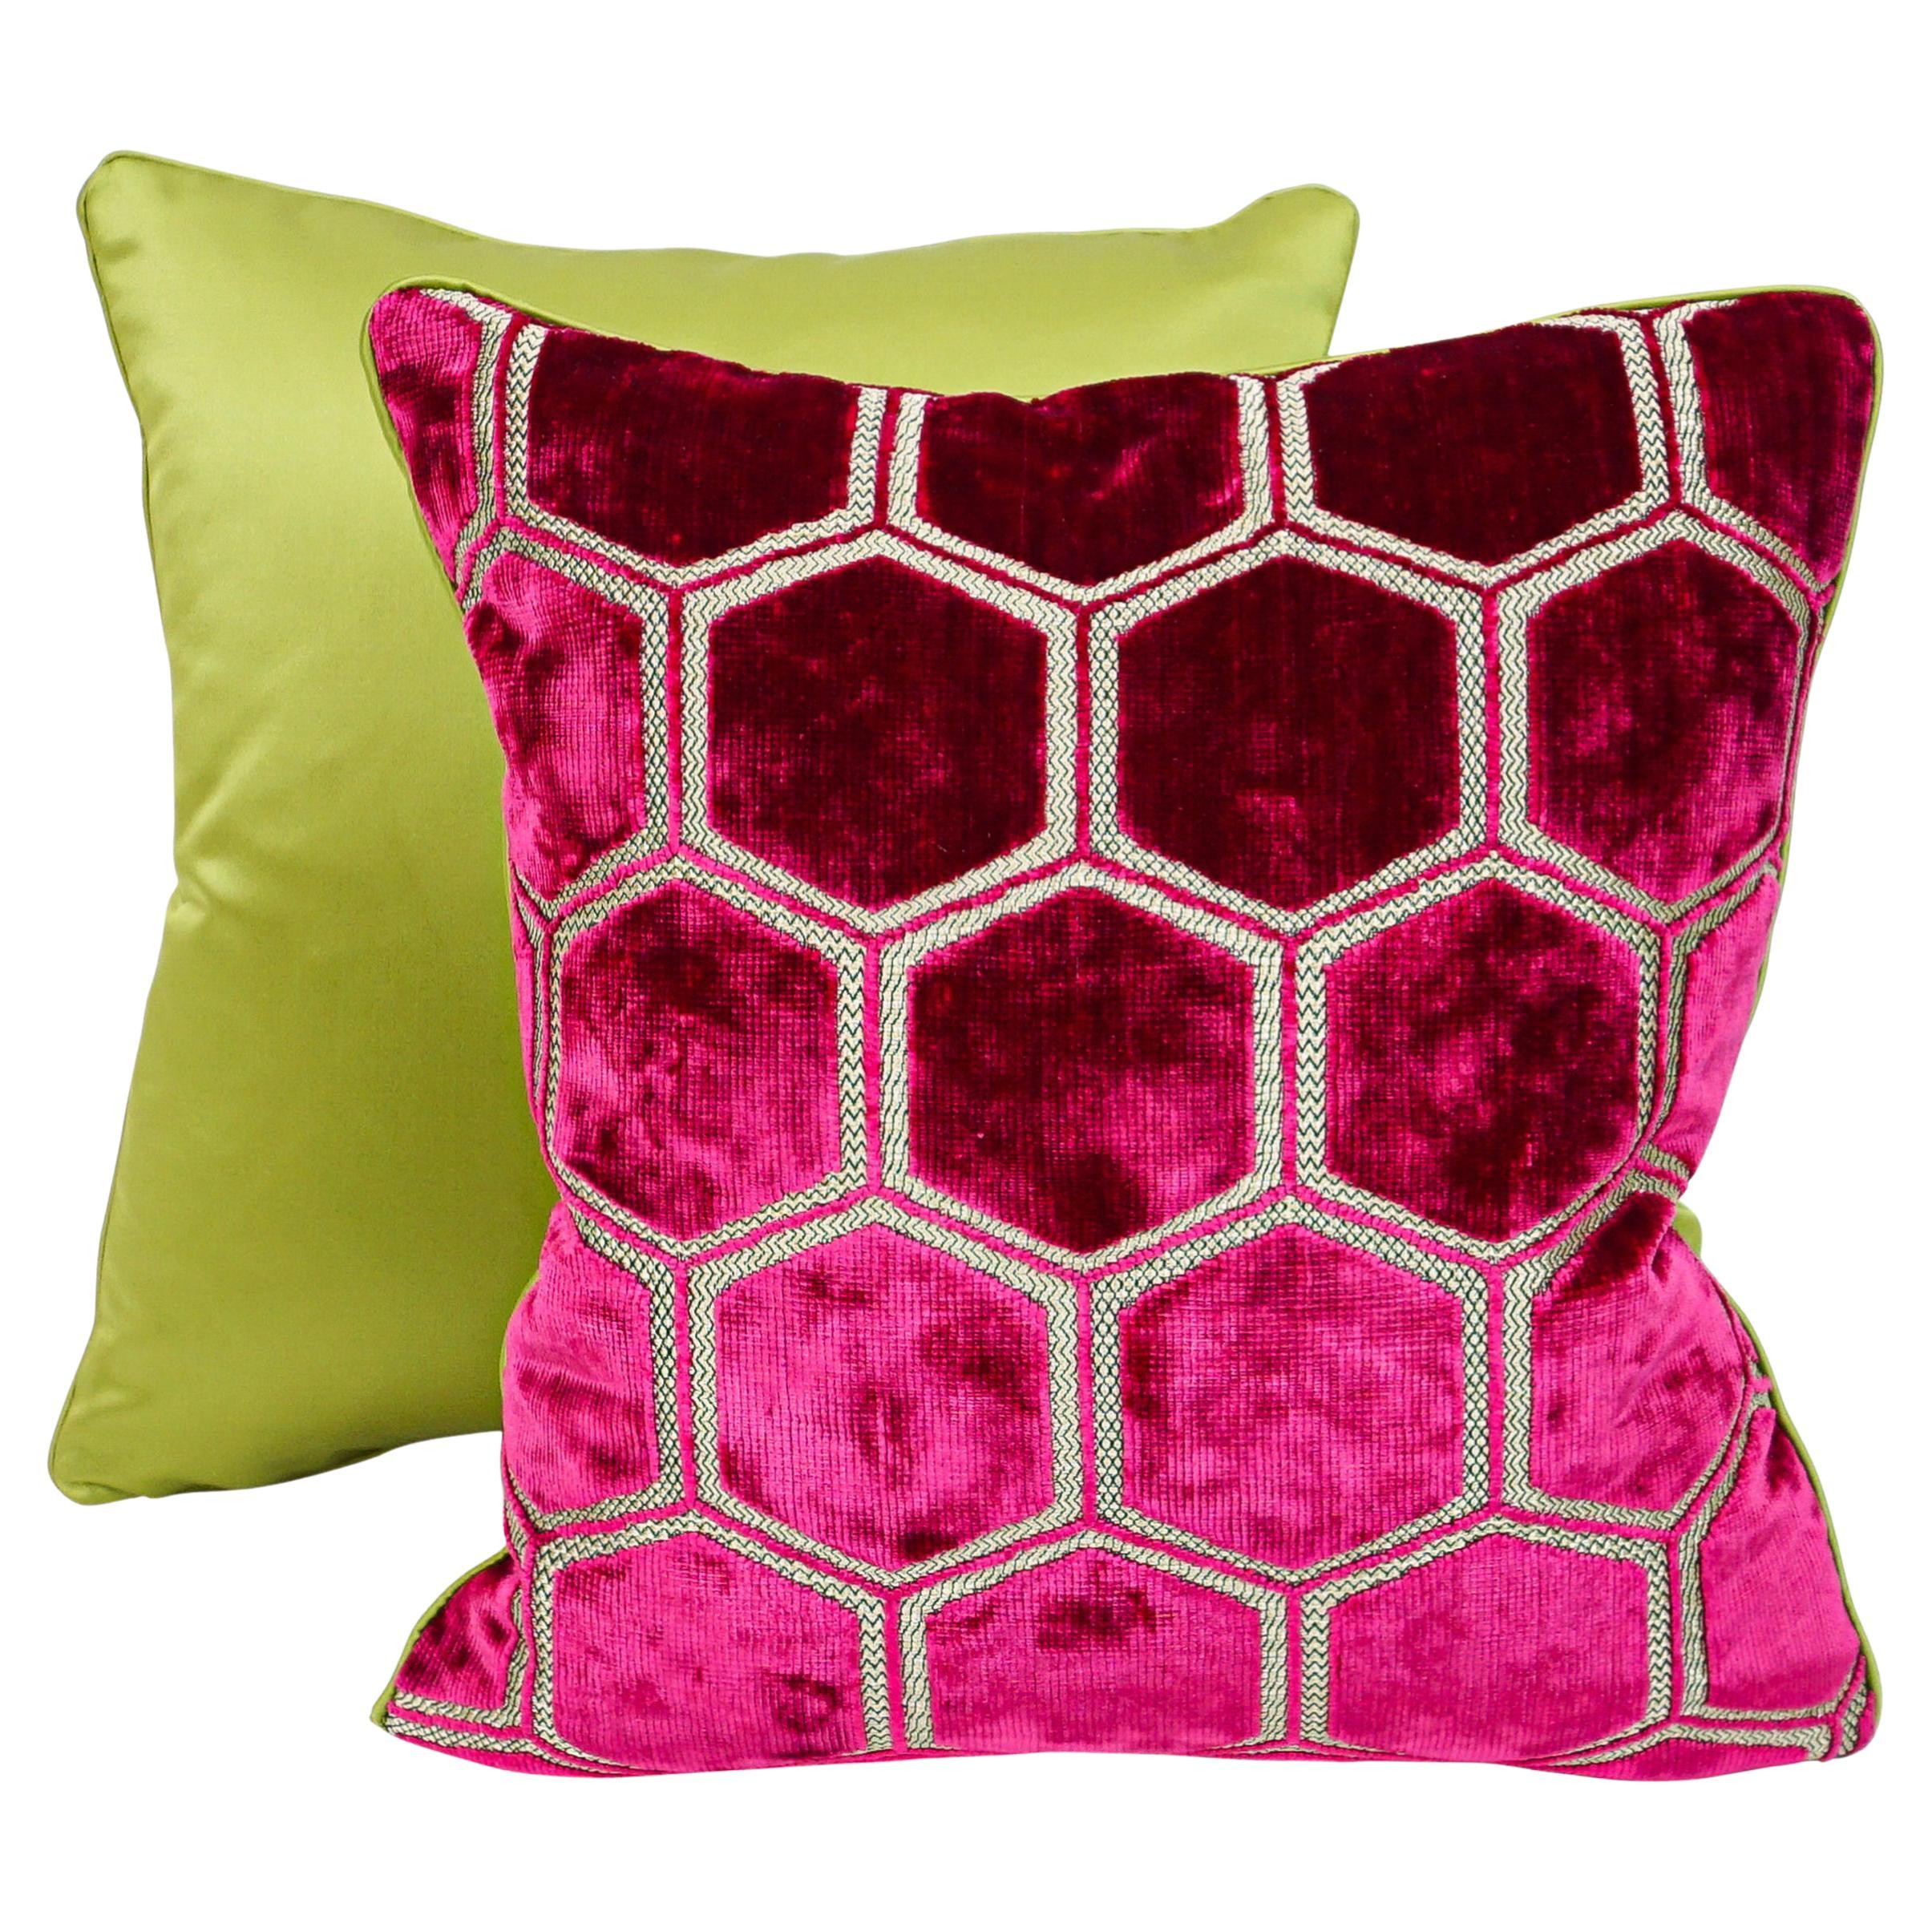 Fuchsia Hexagonal Cut Velvet Square Pillows with Chartreuse Sateen Back